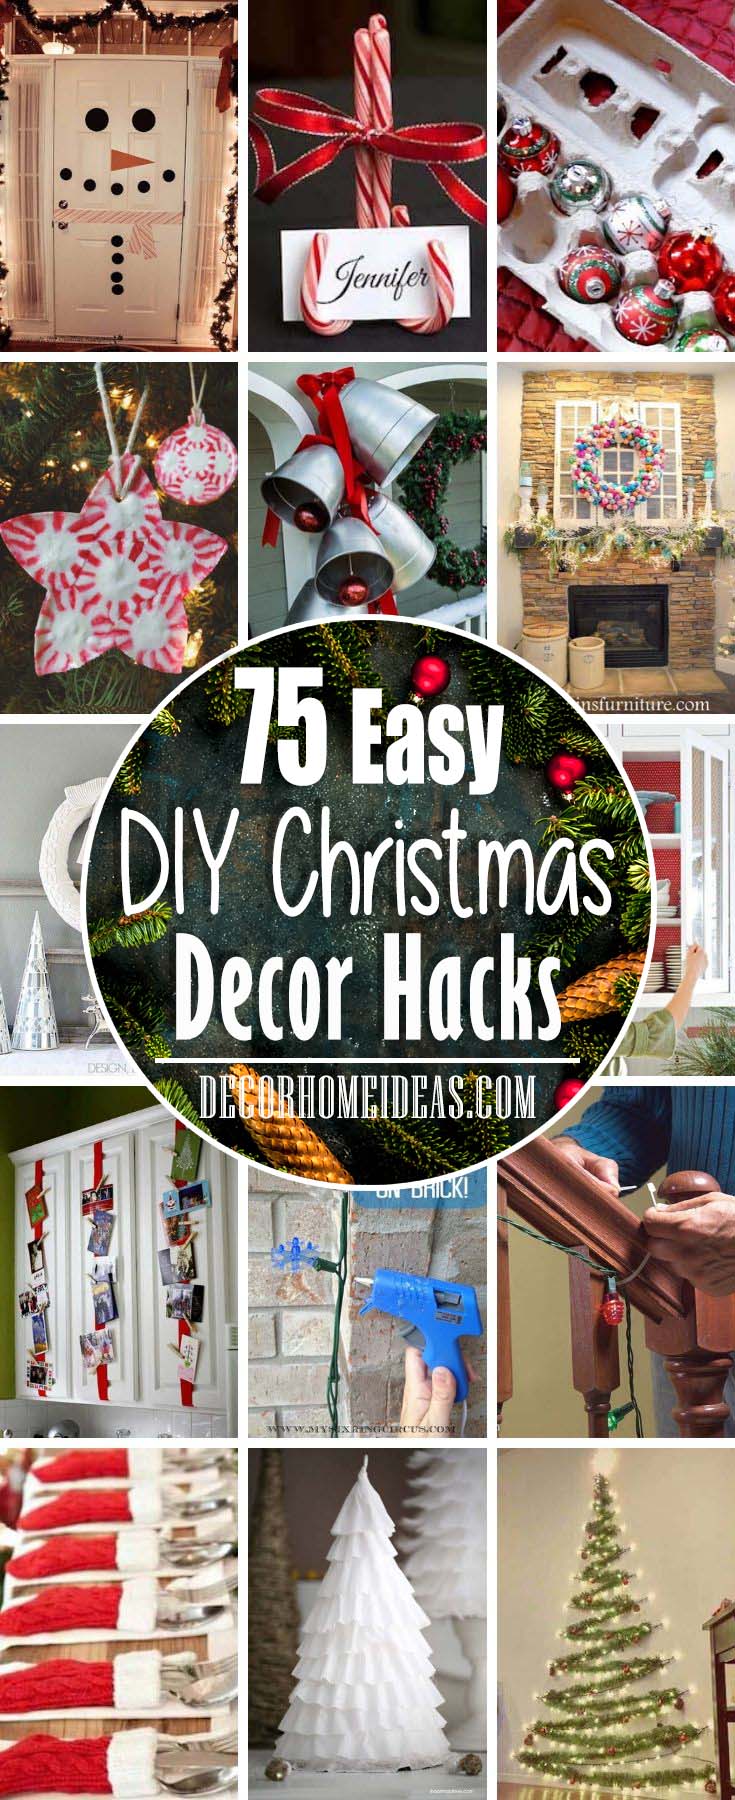 Best Easy Cheap Christmas Decor Hacks #diy #Christmas #decor #hacks #decorhomeideas